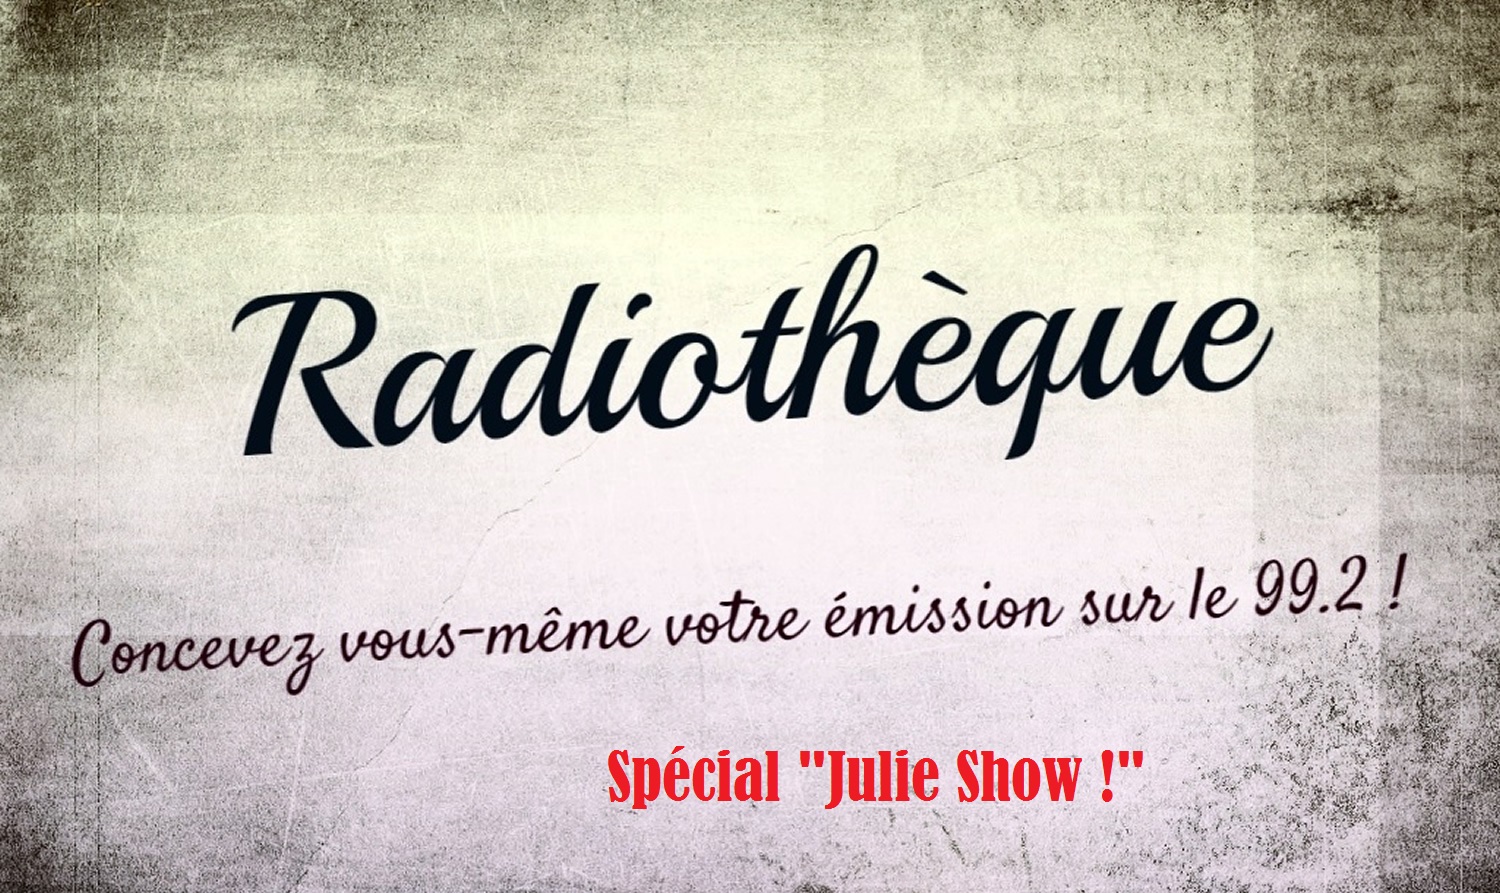 Radiothèque: mardi 3 octobre spécial "Julie Show" #2 !